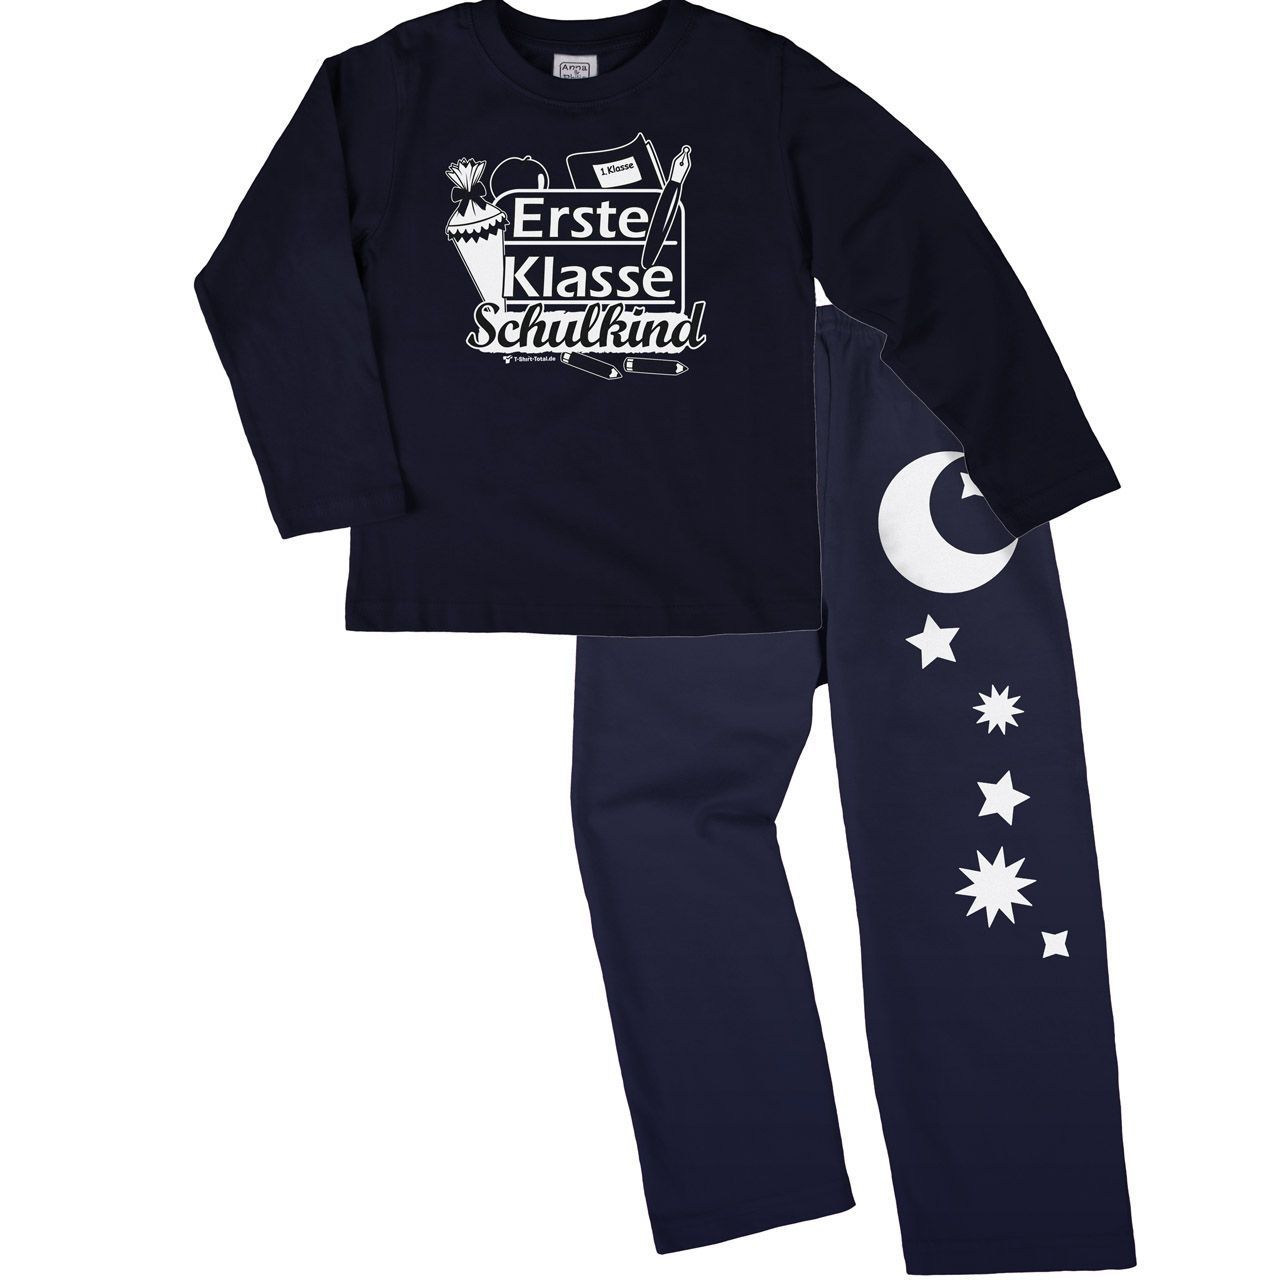 Erste Klasse Schulkind Pyjama Set navy / navy 122 / 128